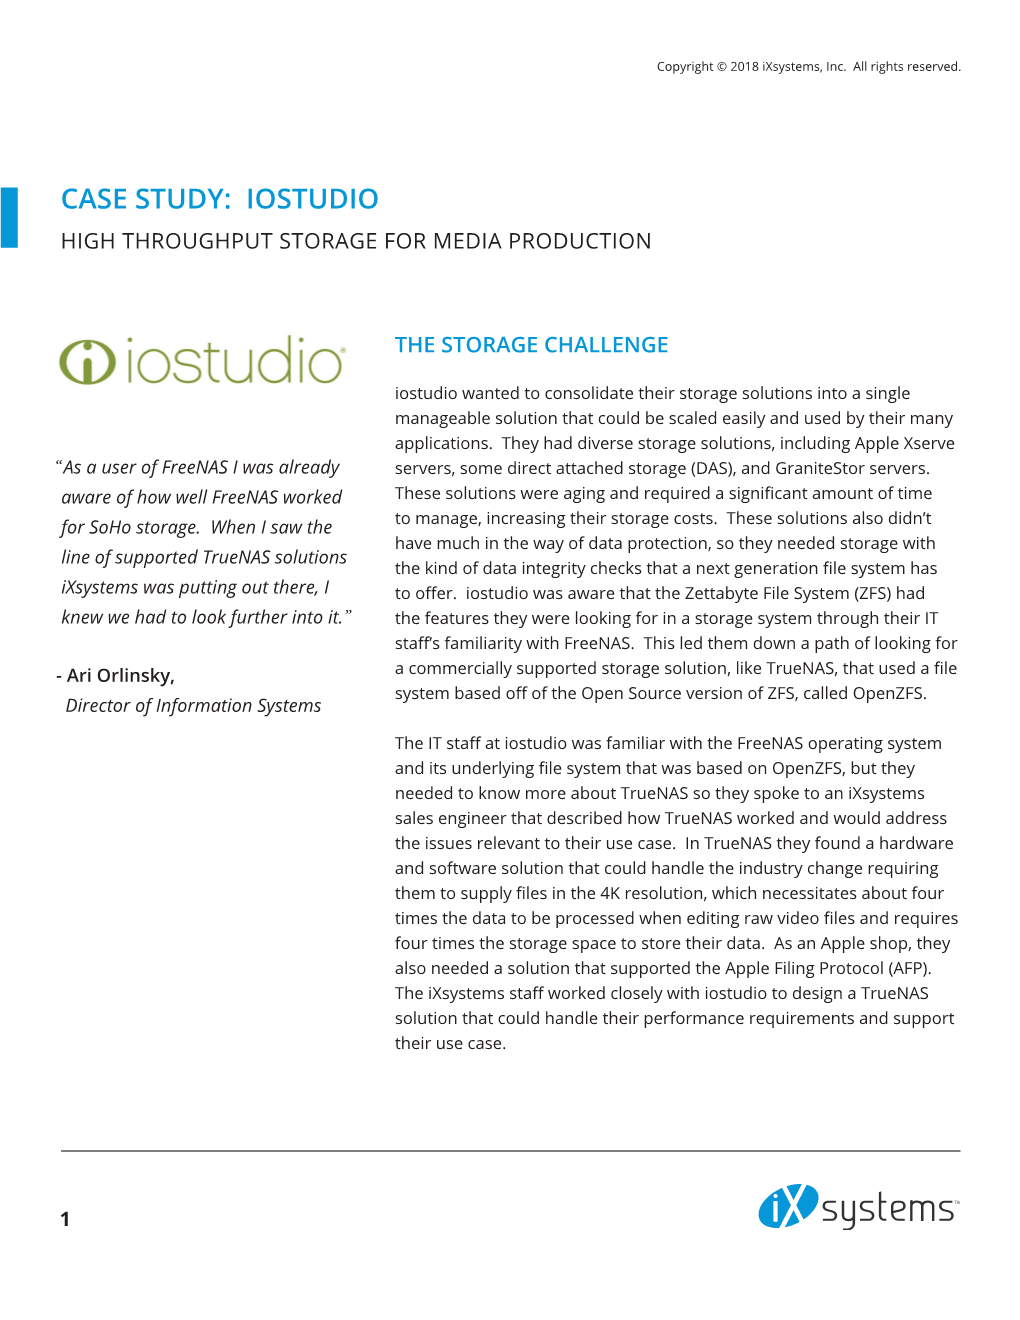 Case Study: Iostudio High Throughput Storage for Media Production